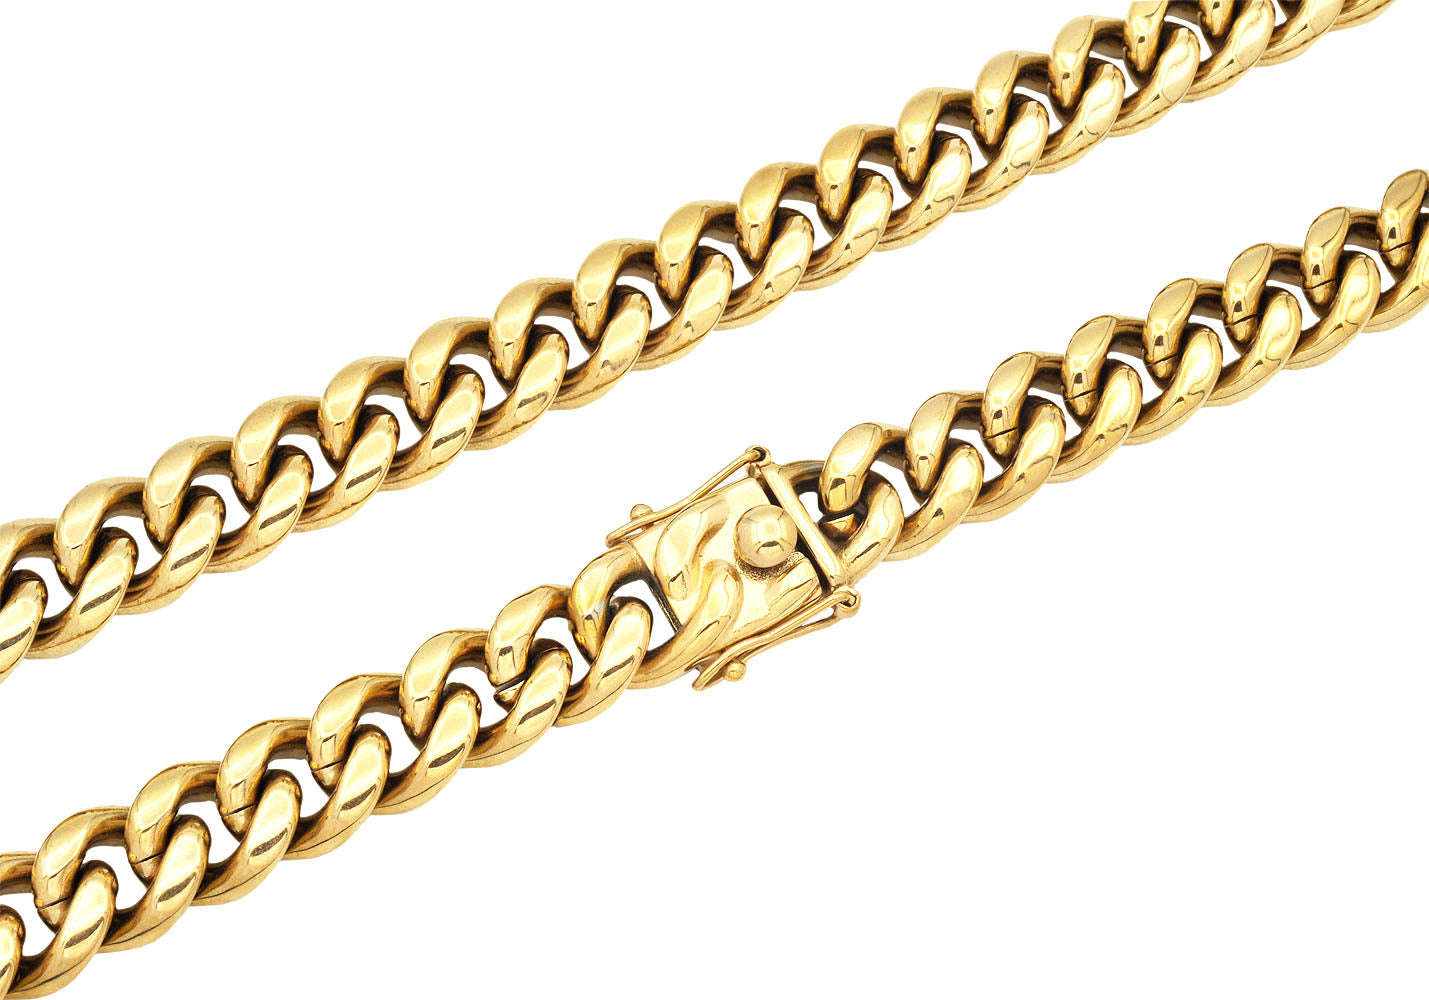 14mm Enamel Cuban Link Necklace Chain Orange